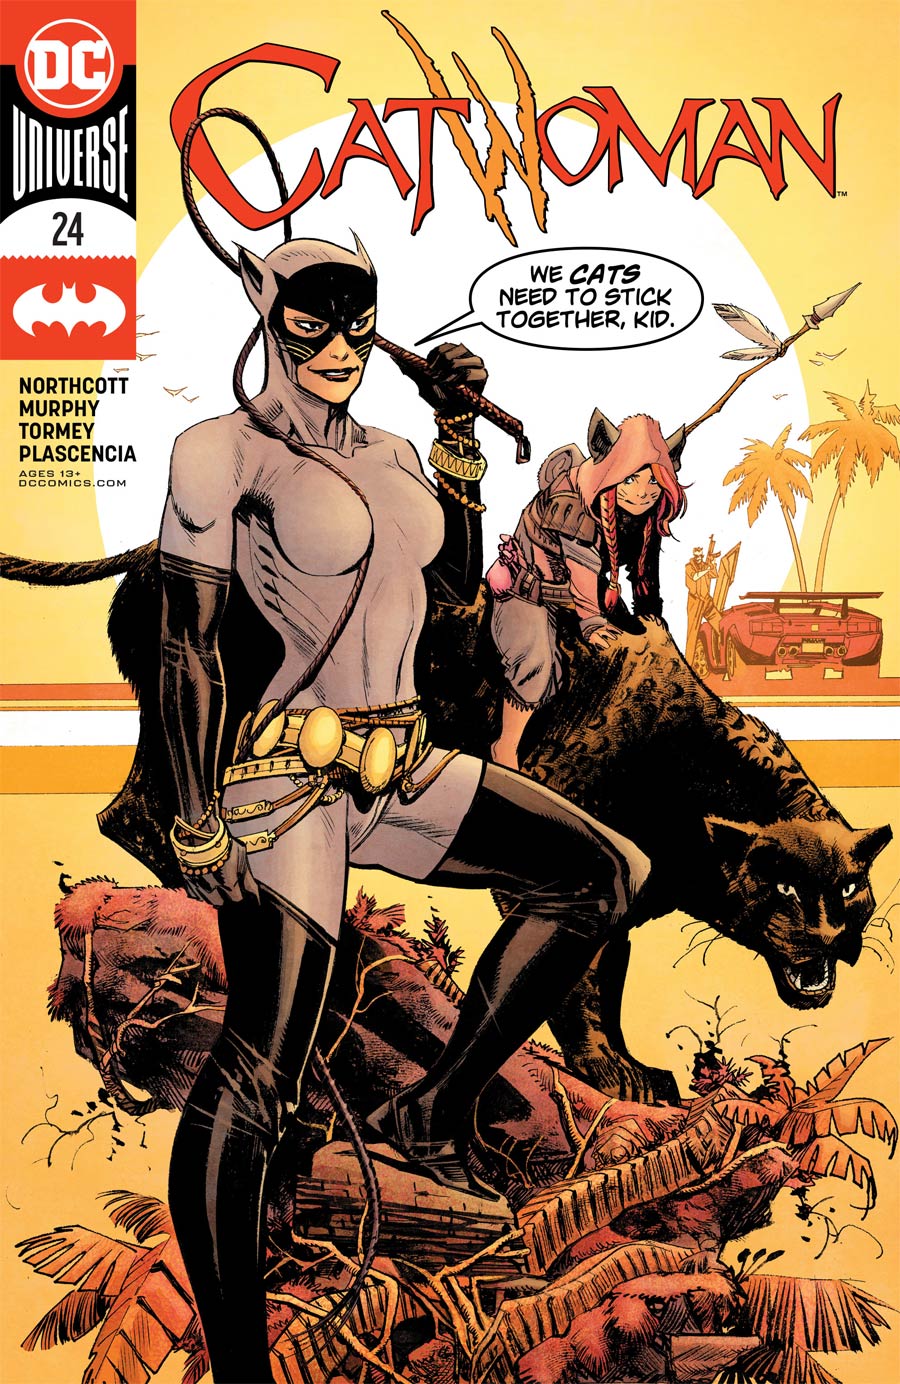 Catwoman Vol 5 #24 Cover A Regular Sean Murphy Cover